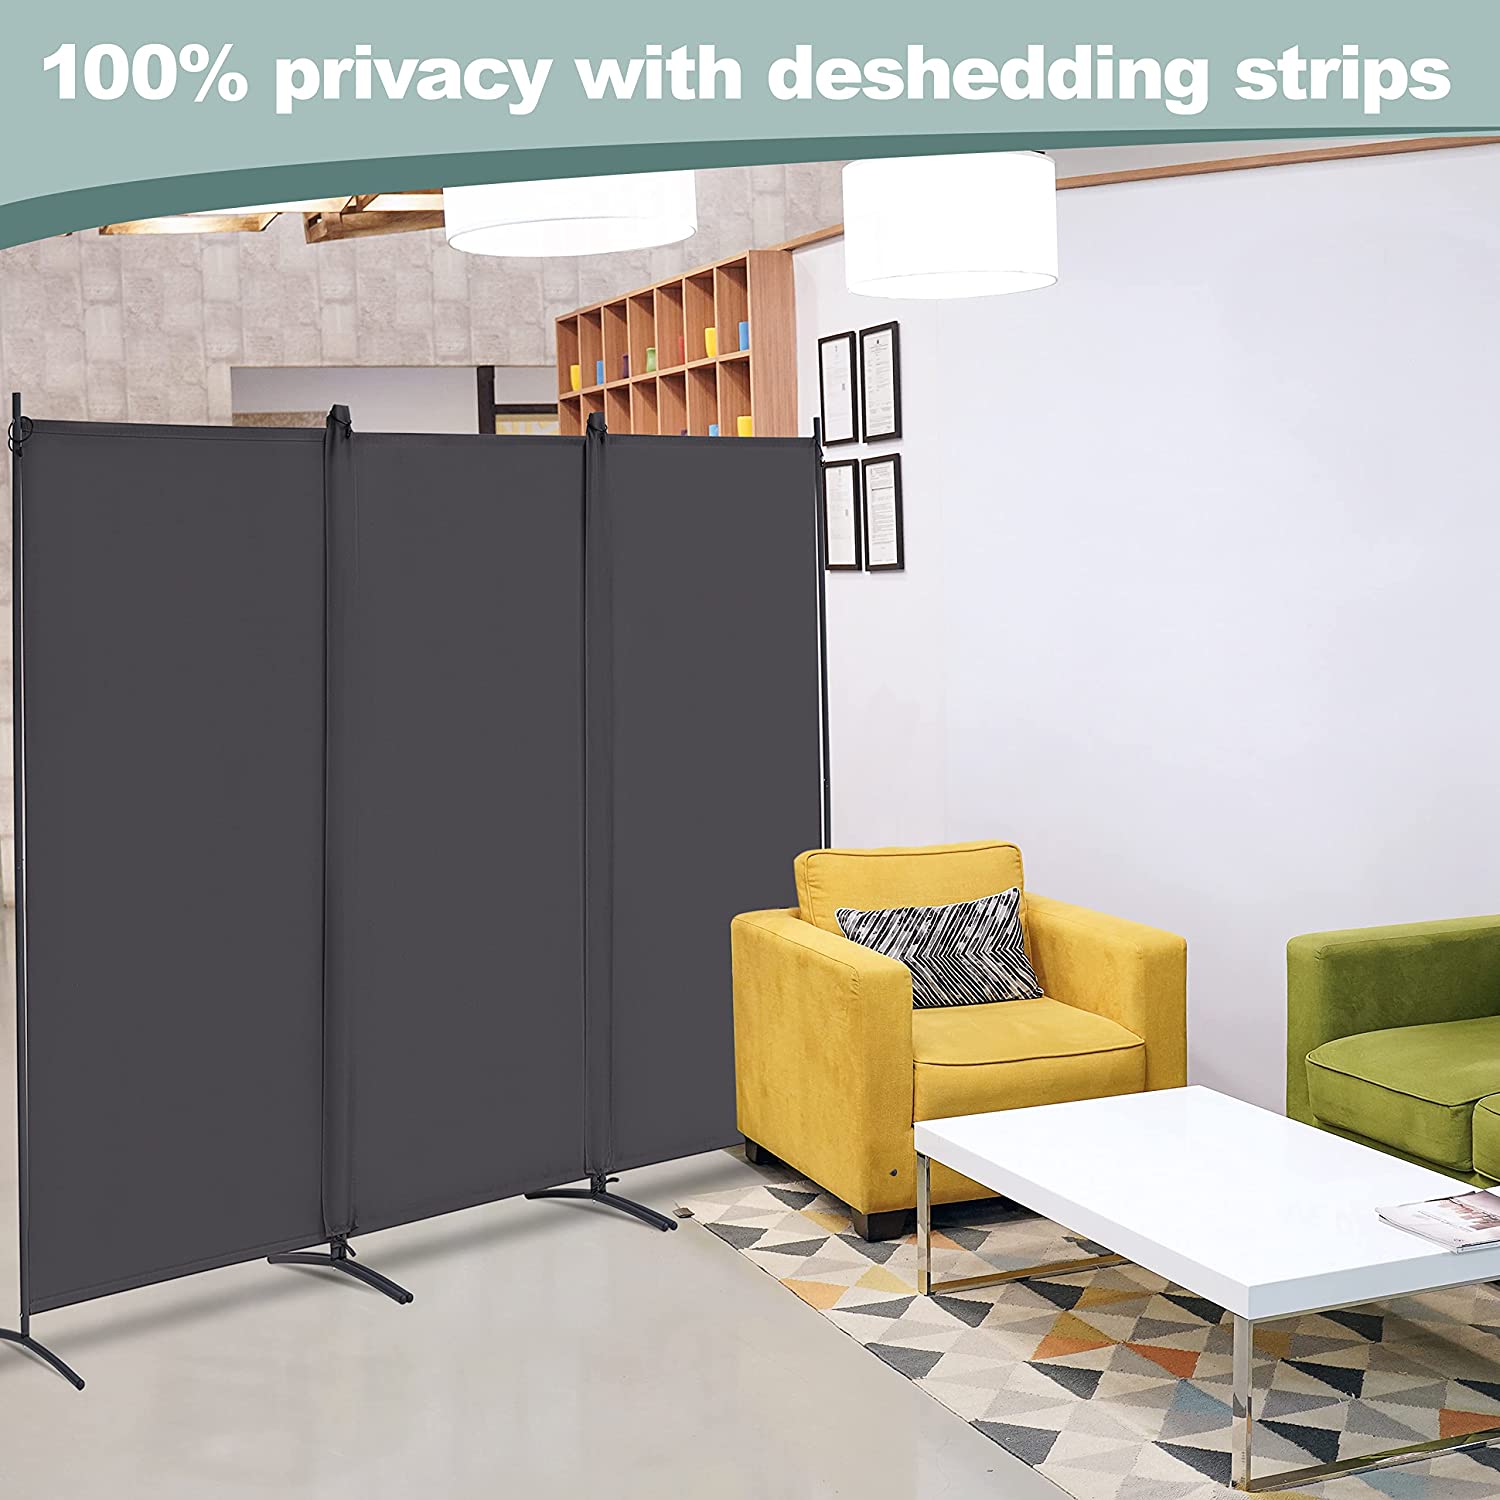 100% Privacy - Shedding Strips